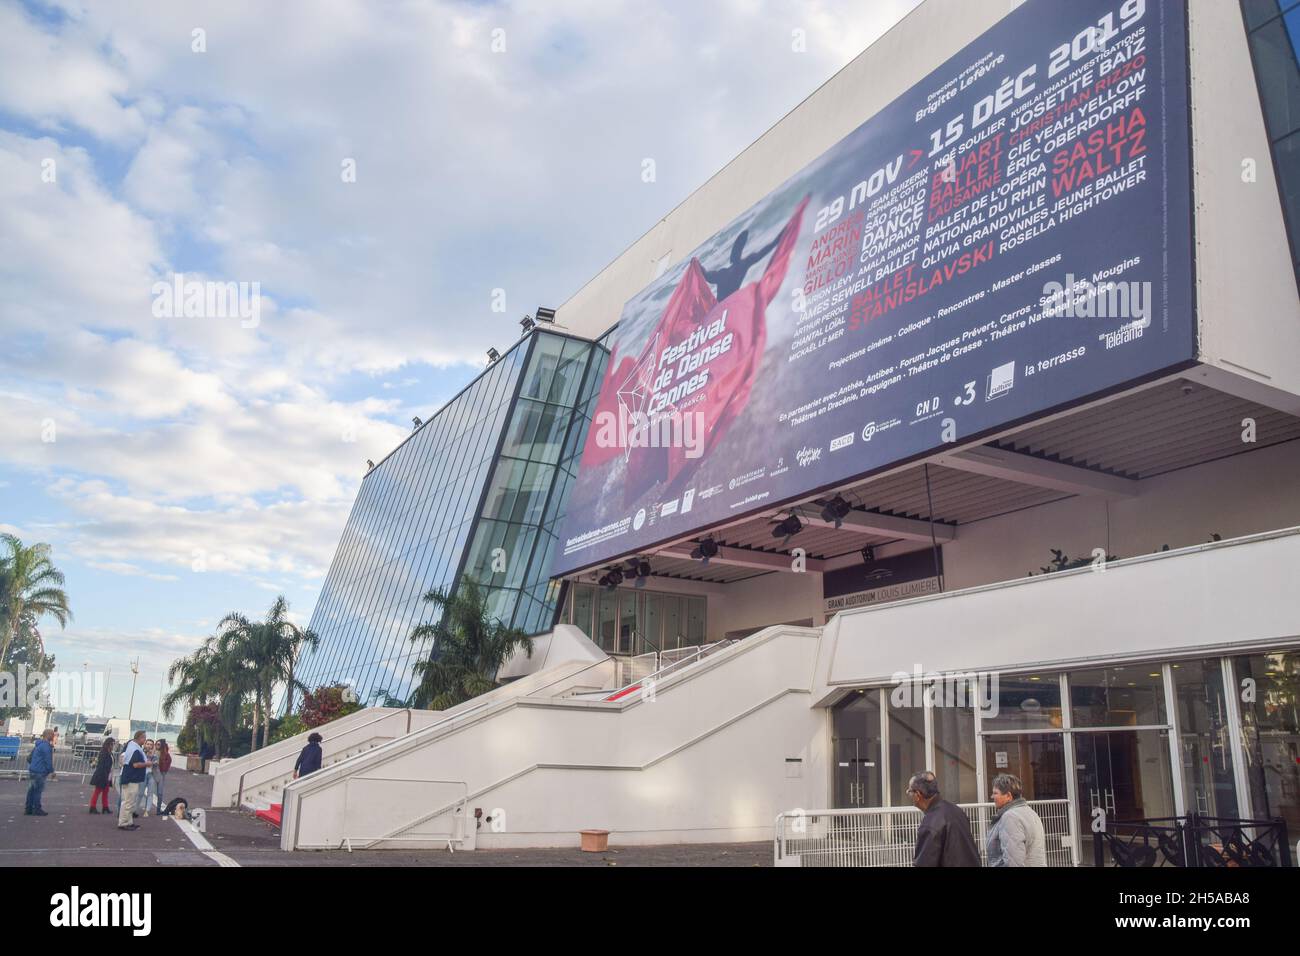 Festival de Danse 2019, Cannes, Frankreich Stockfoto